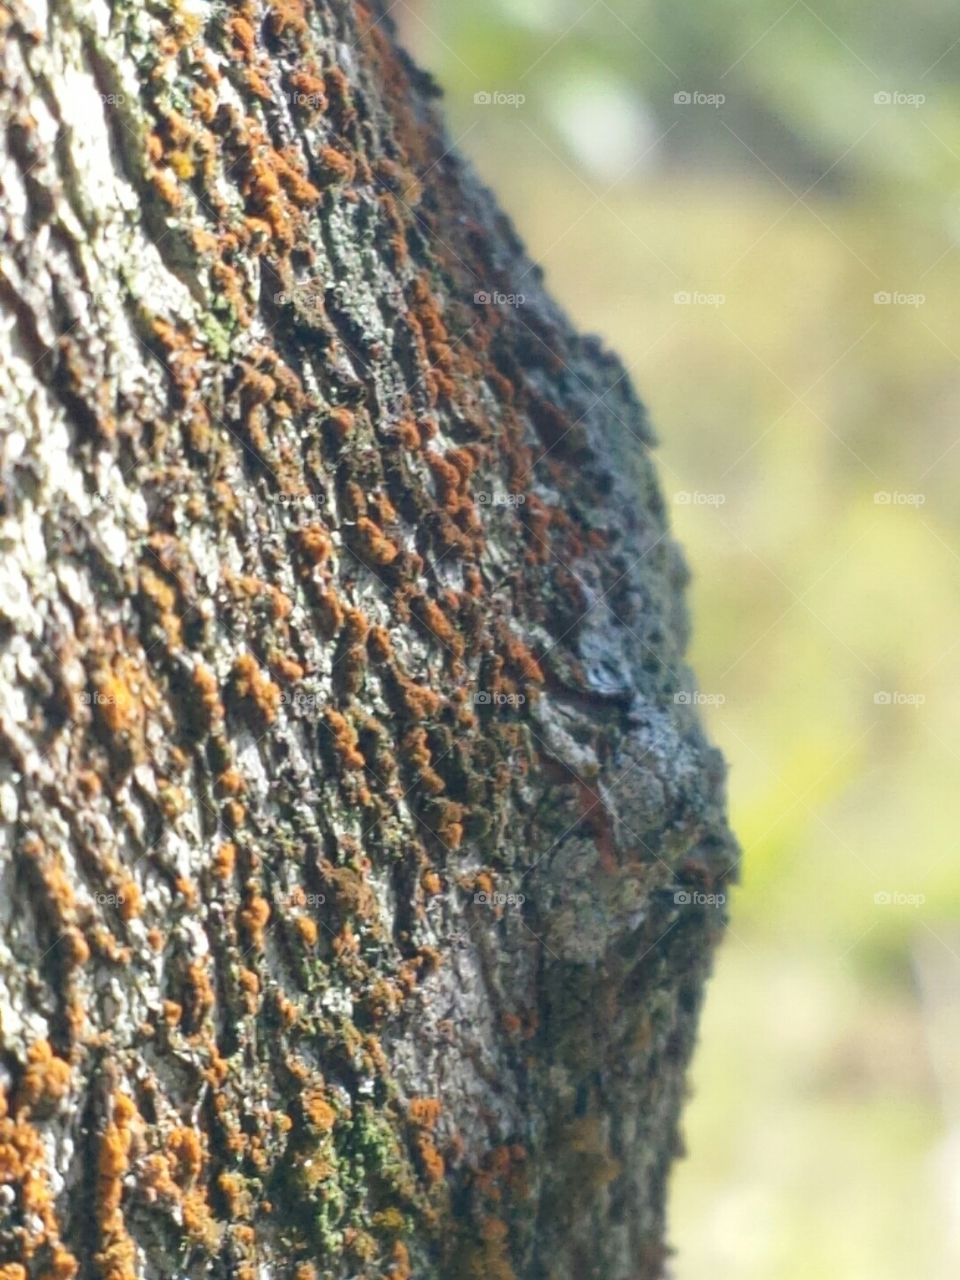 tree bark with moss